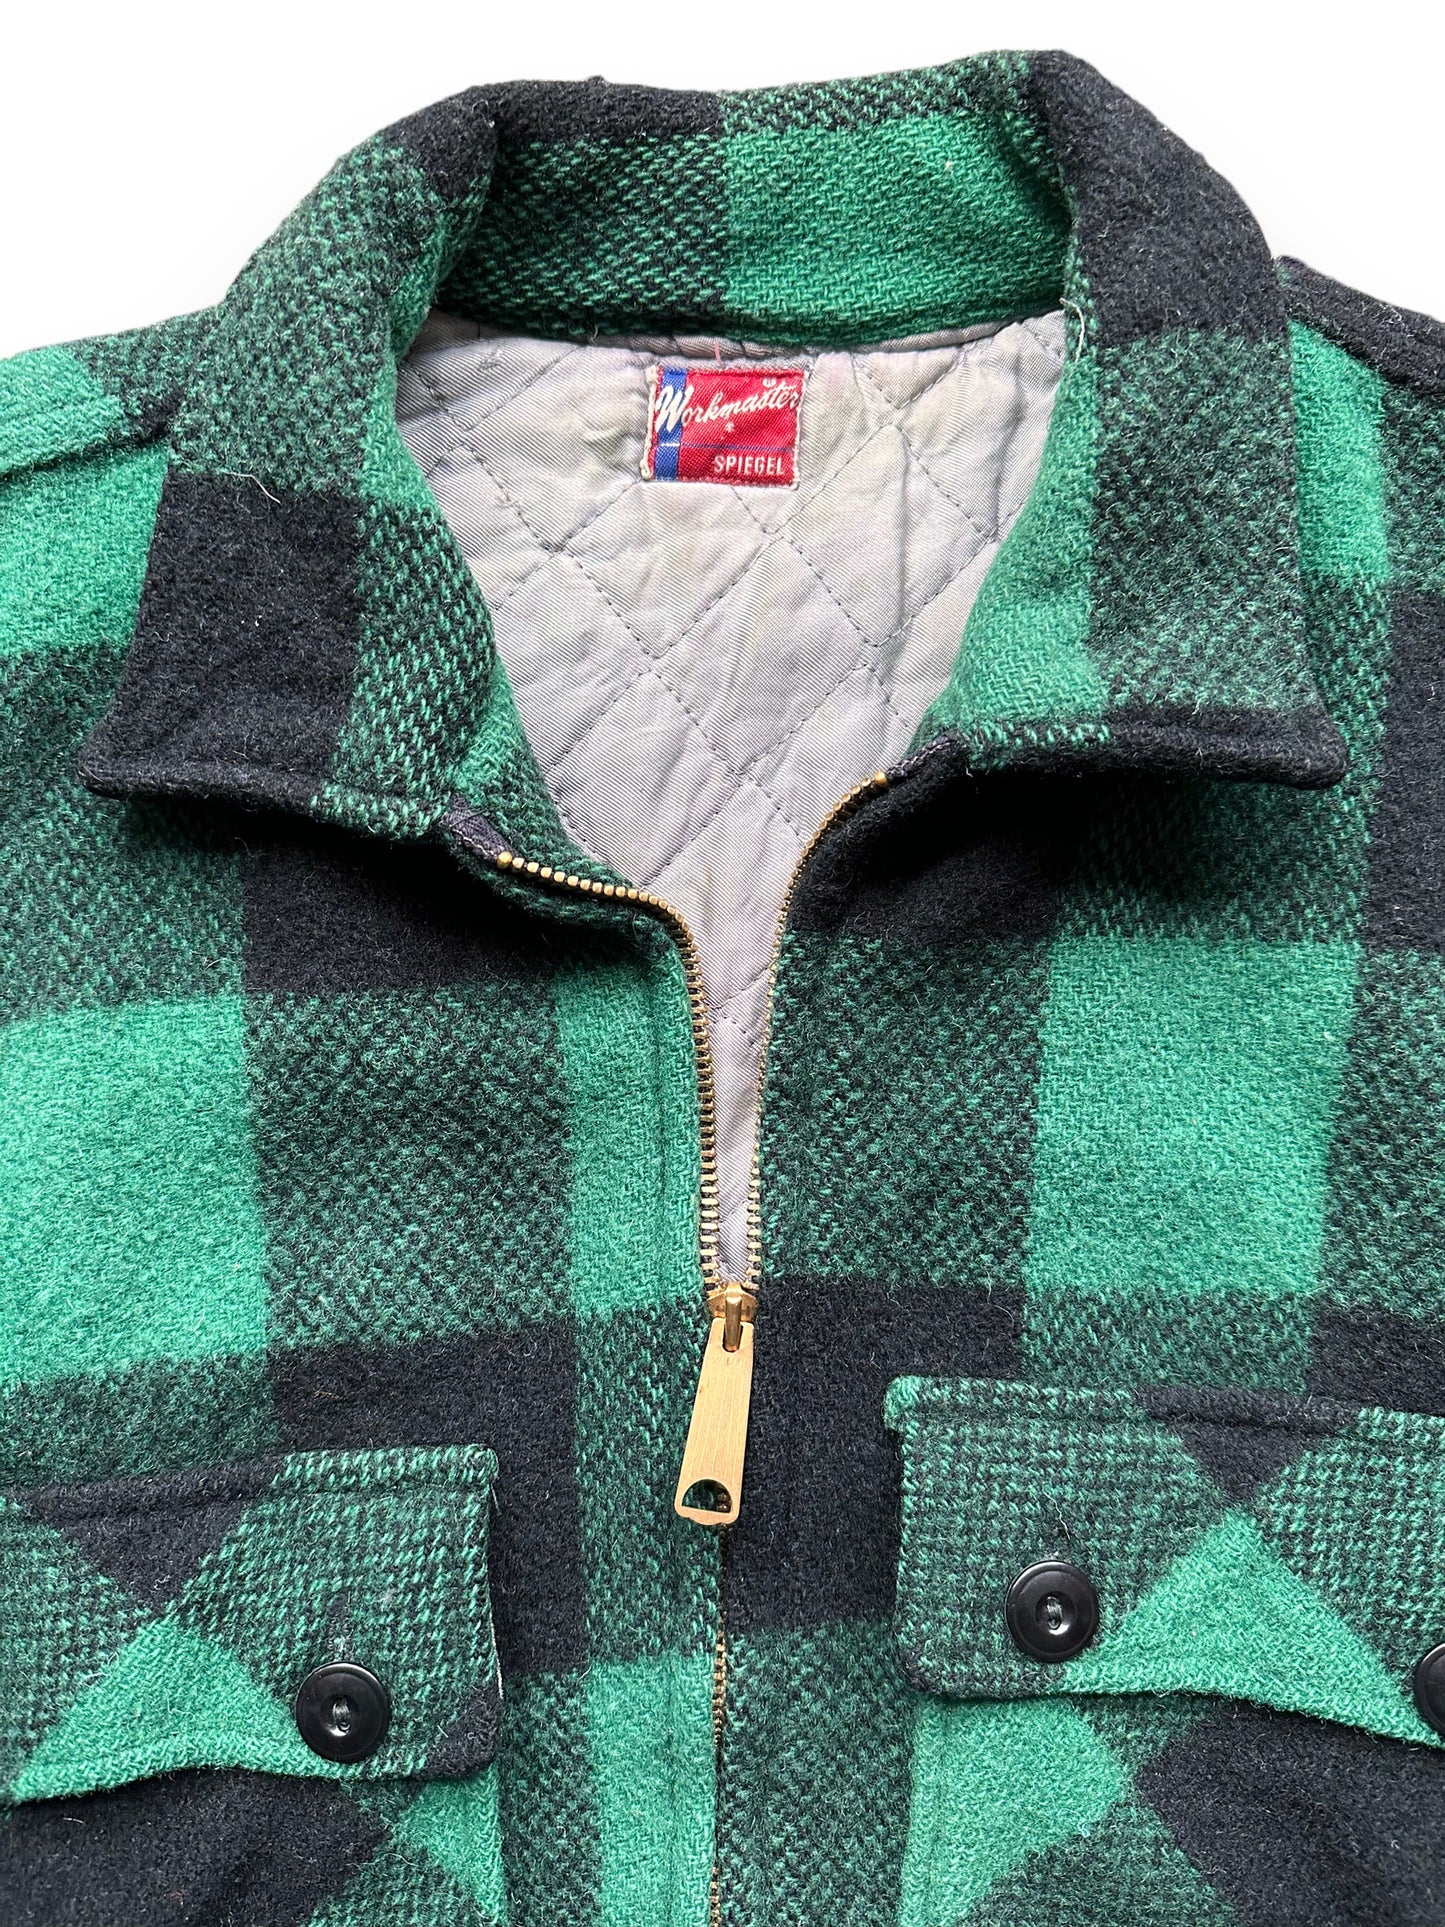 Upper Front Collar View of Vintage Green & Black Spiegel Workmaster Jacket SZ L | Vintage Wool Jacket Seattle | Barn Owl Vintage Seattle